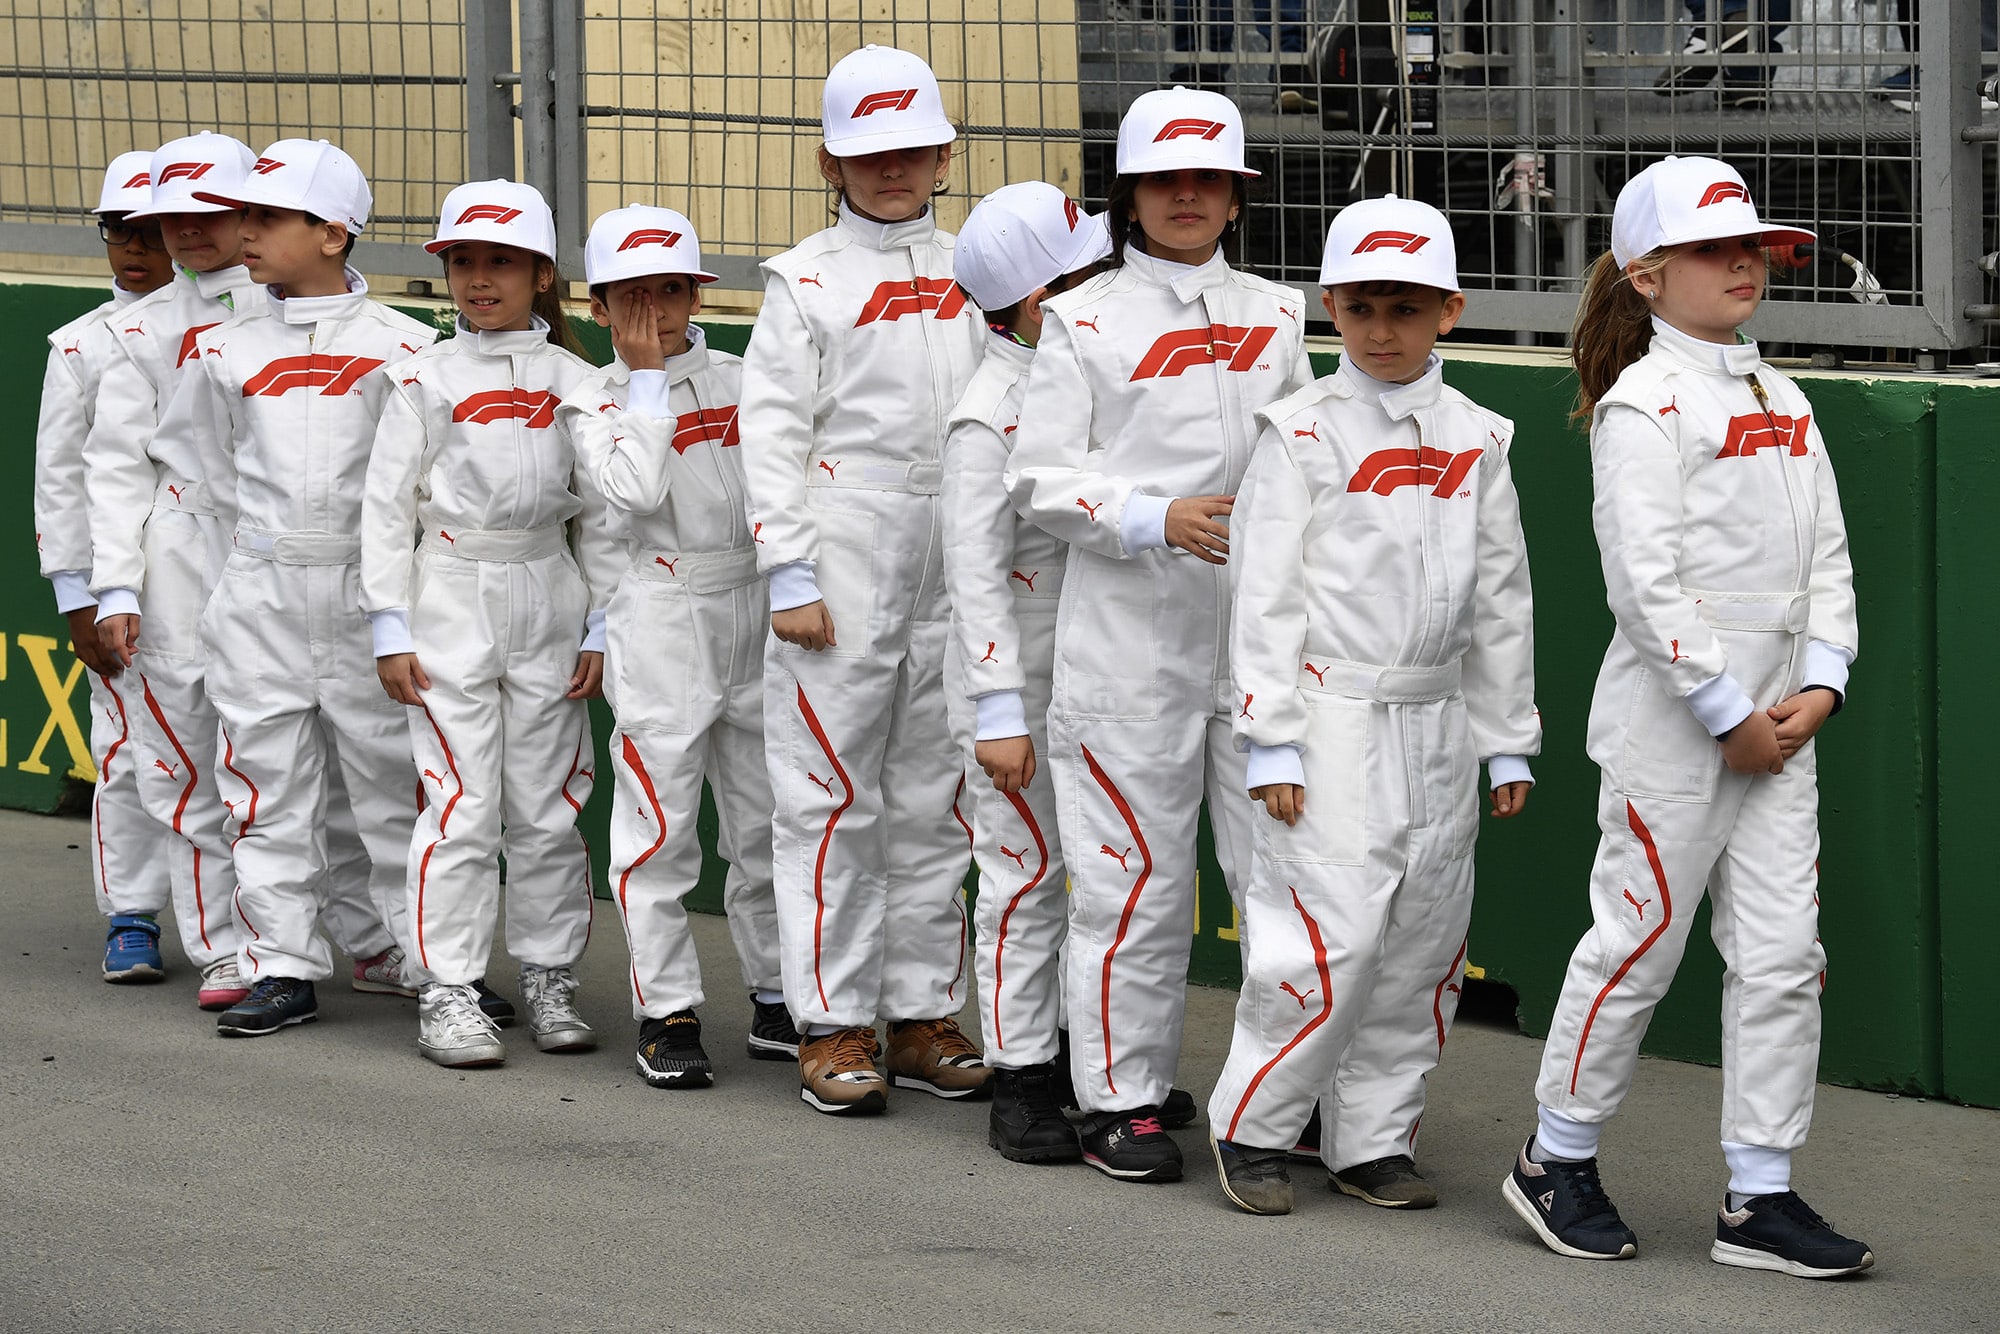 F1 grid kids in Azerbaijan 2018